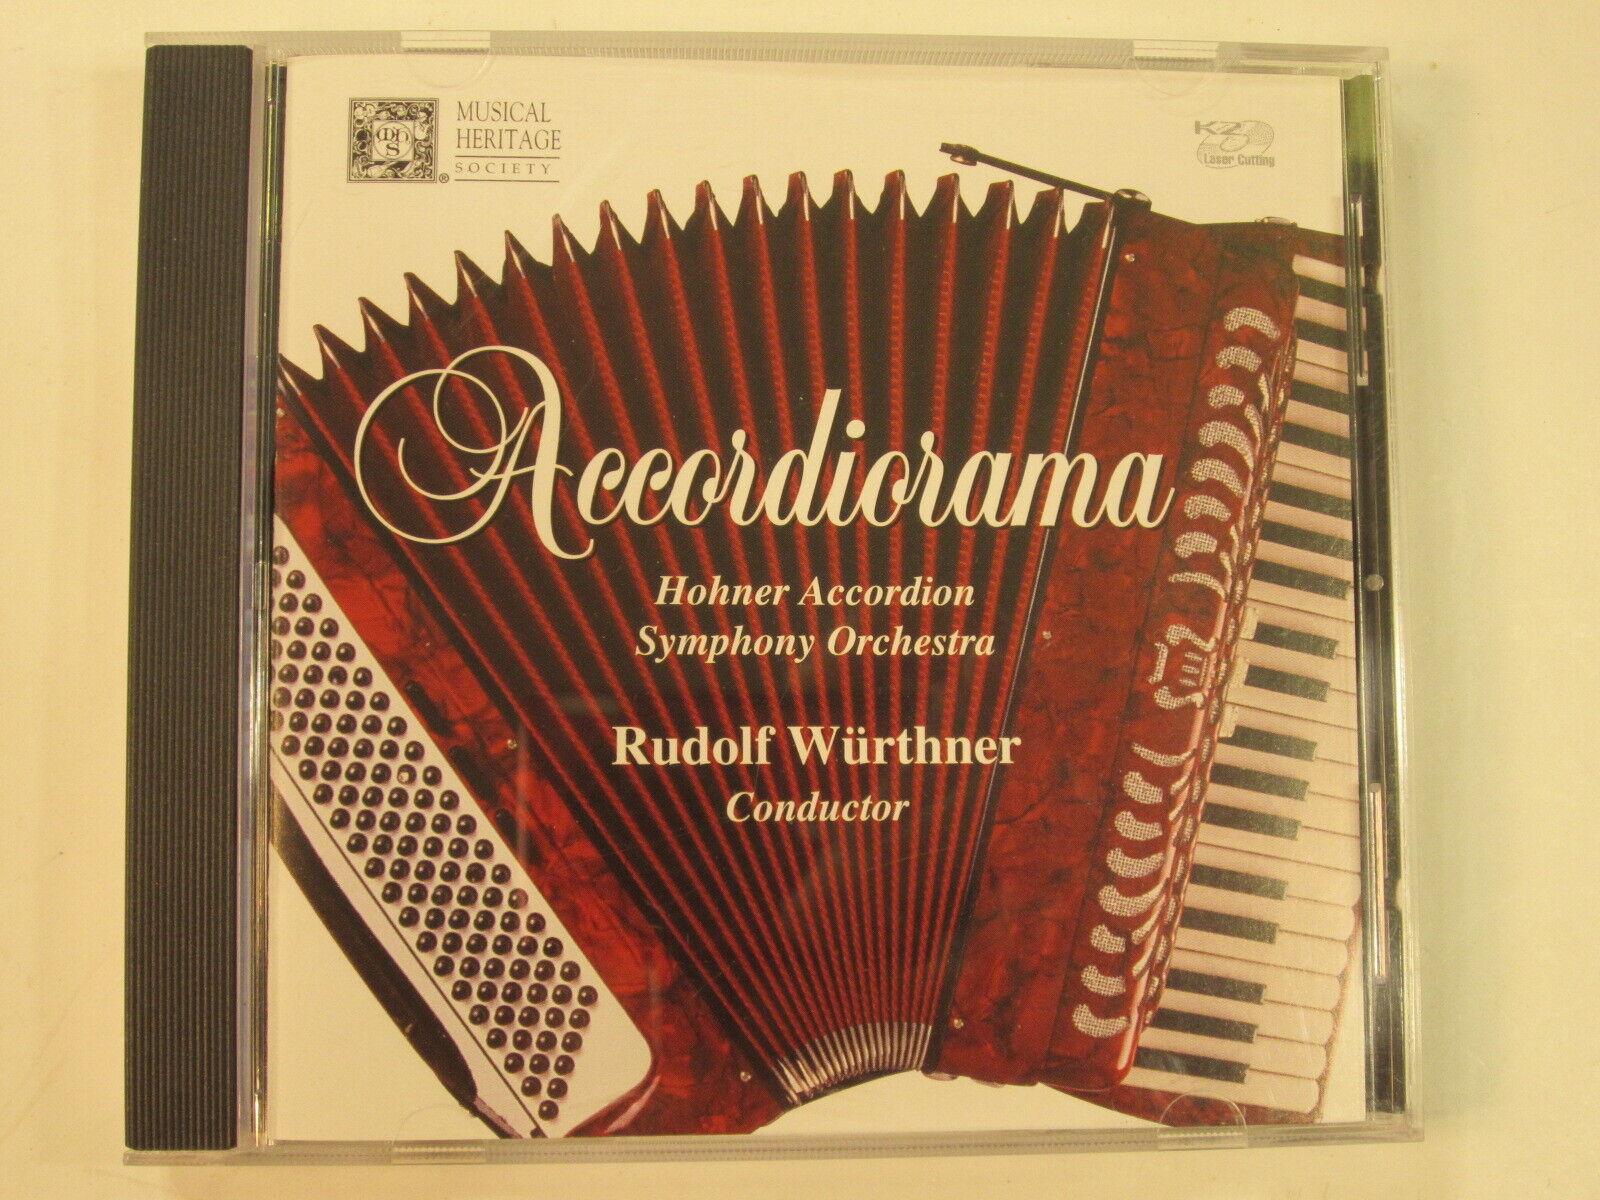 Accordiorama - Hohner Accordion Symphony Orchestra - Rudolf Wurthner - CD